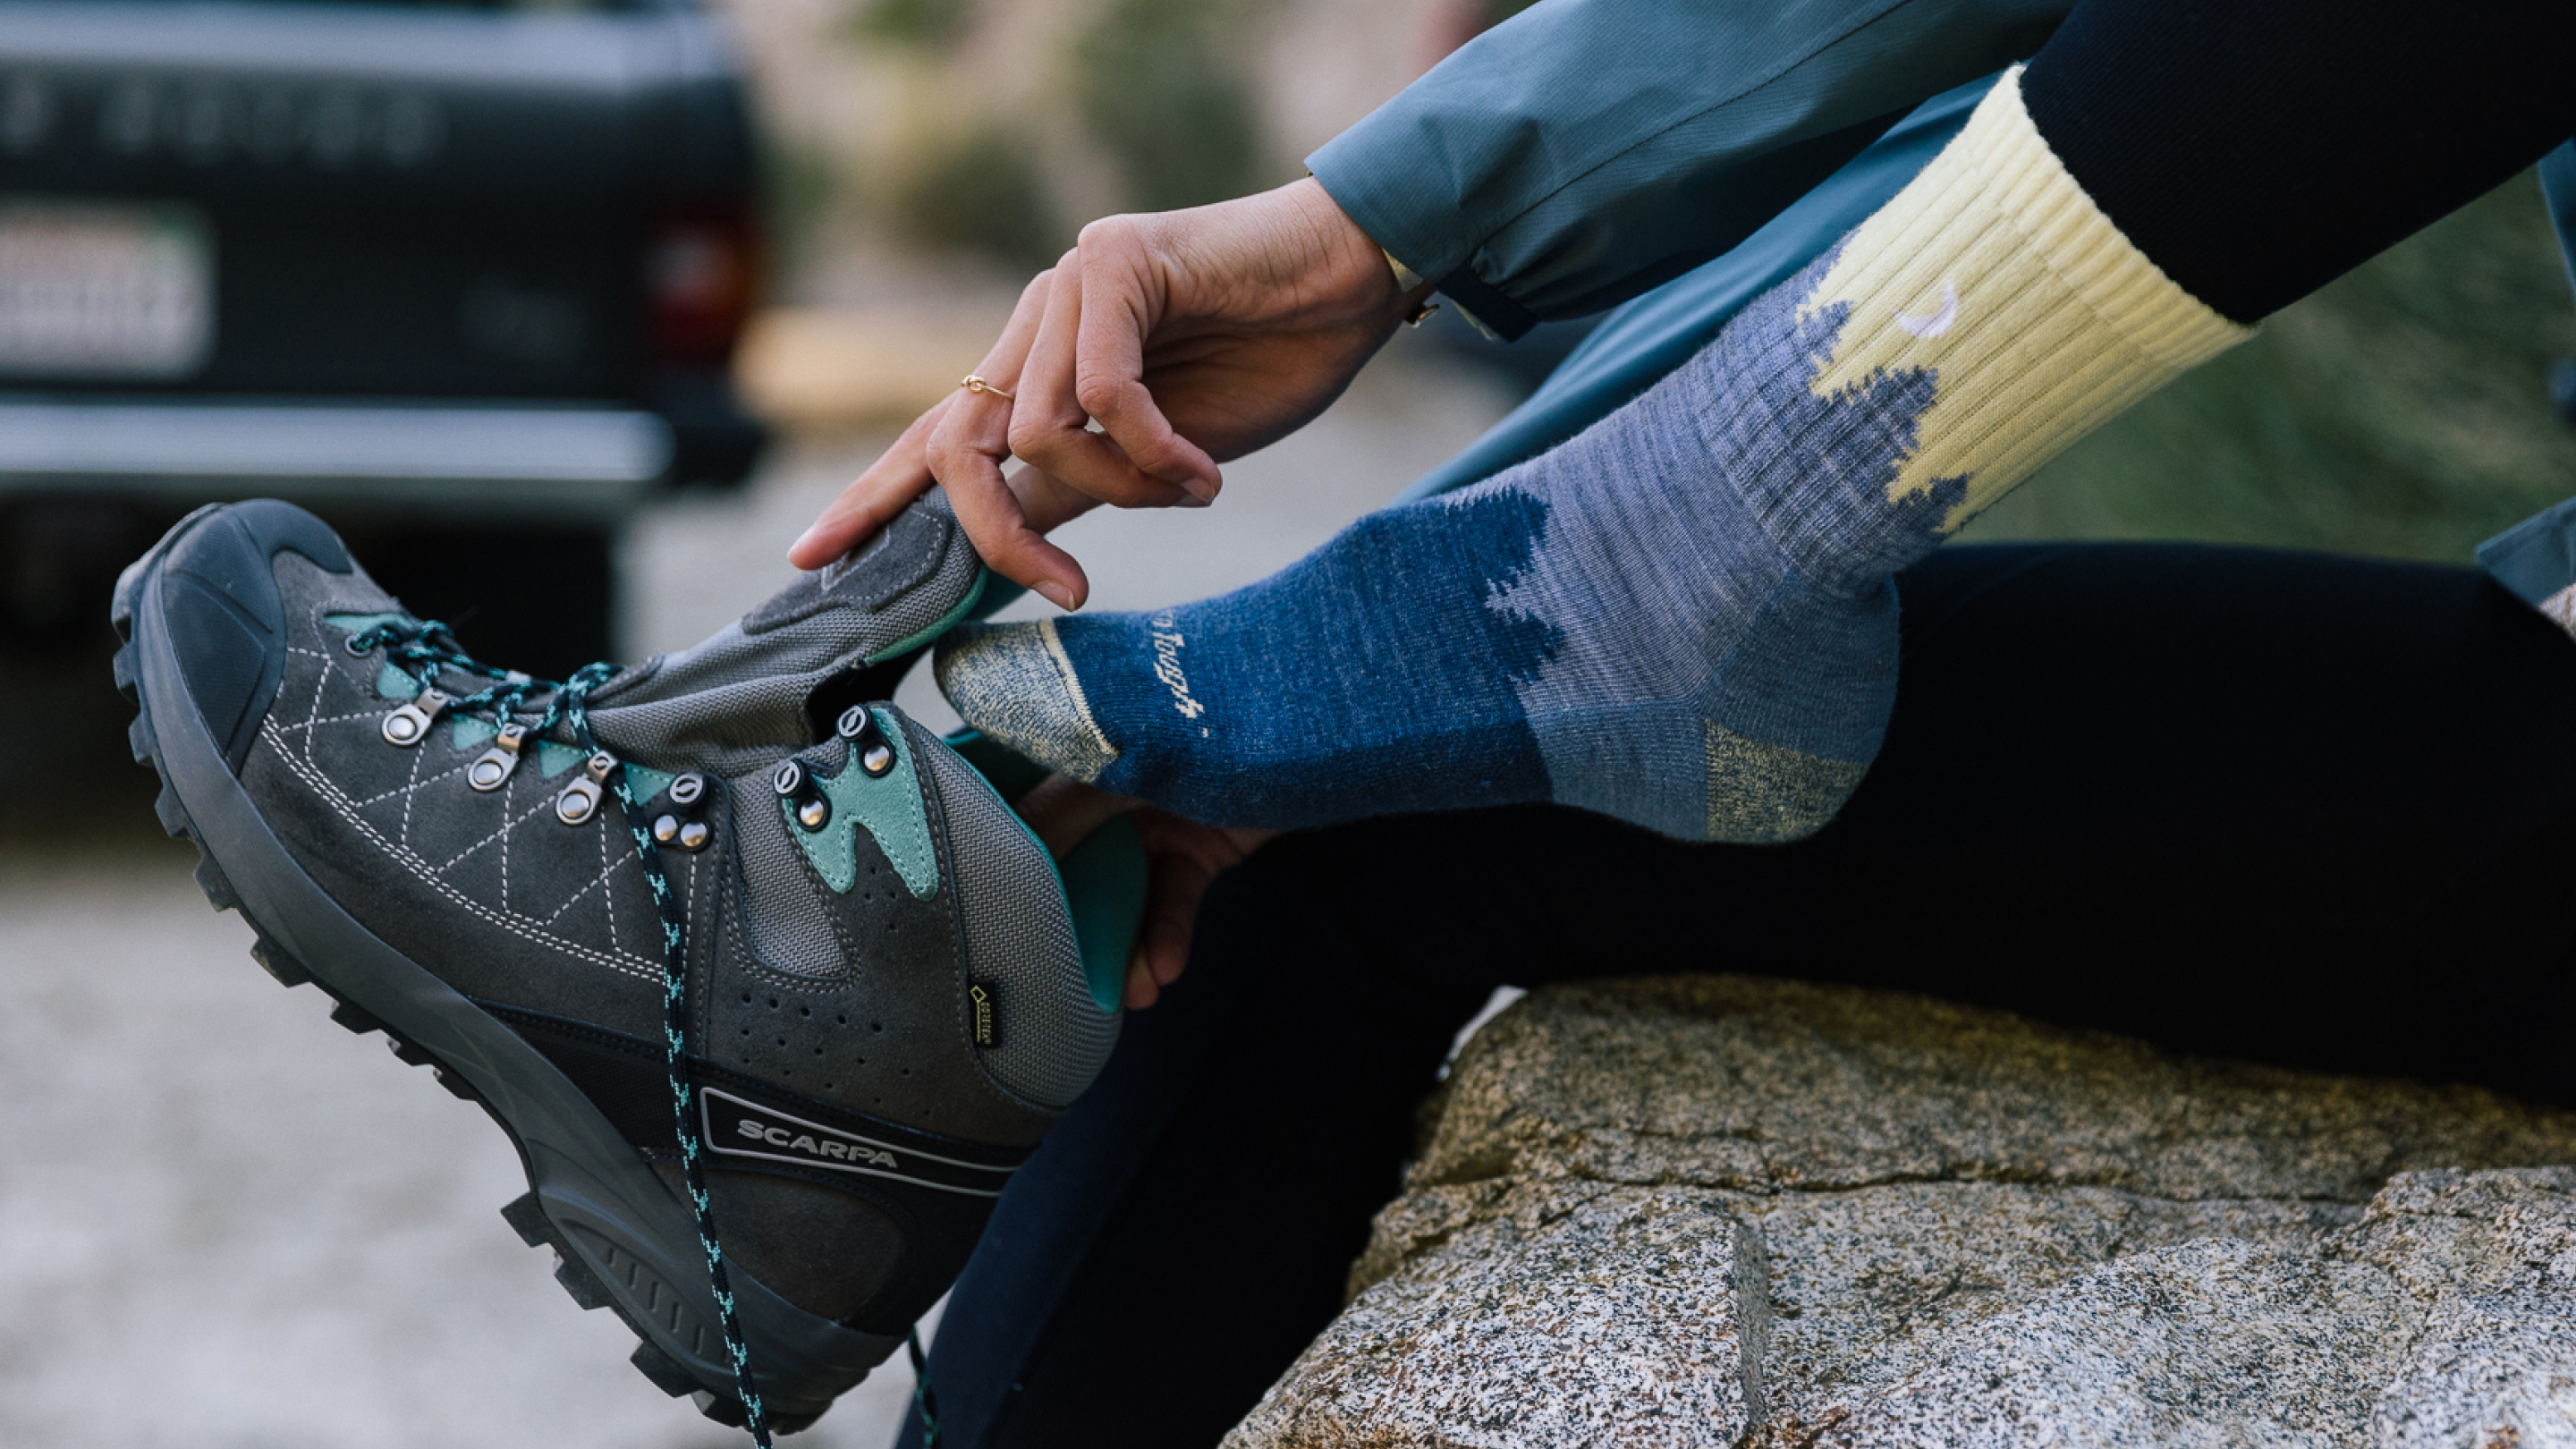 Women's Gatewood Boot Hiking Socks – Darn Tough